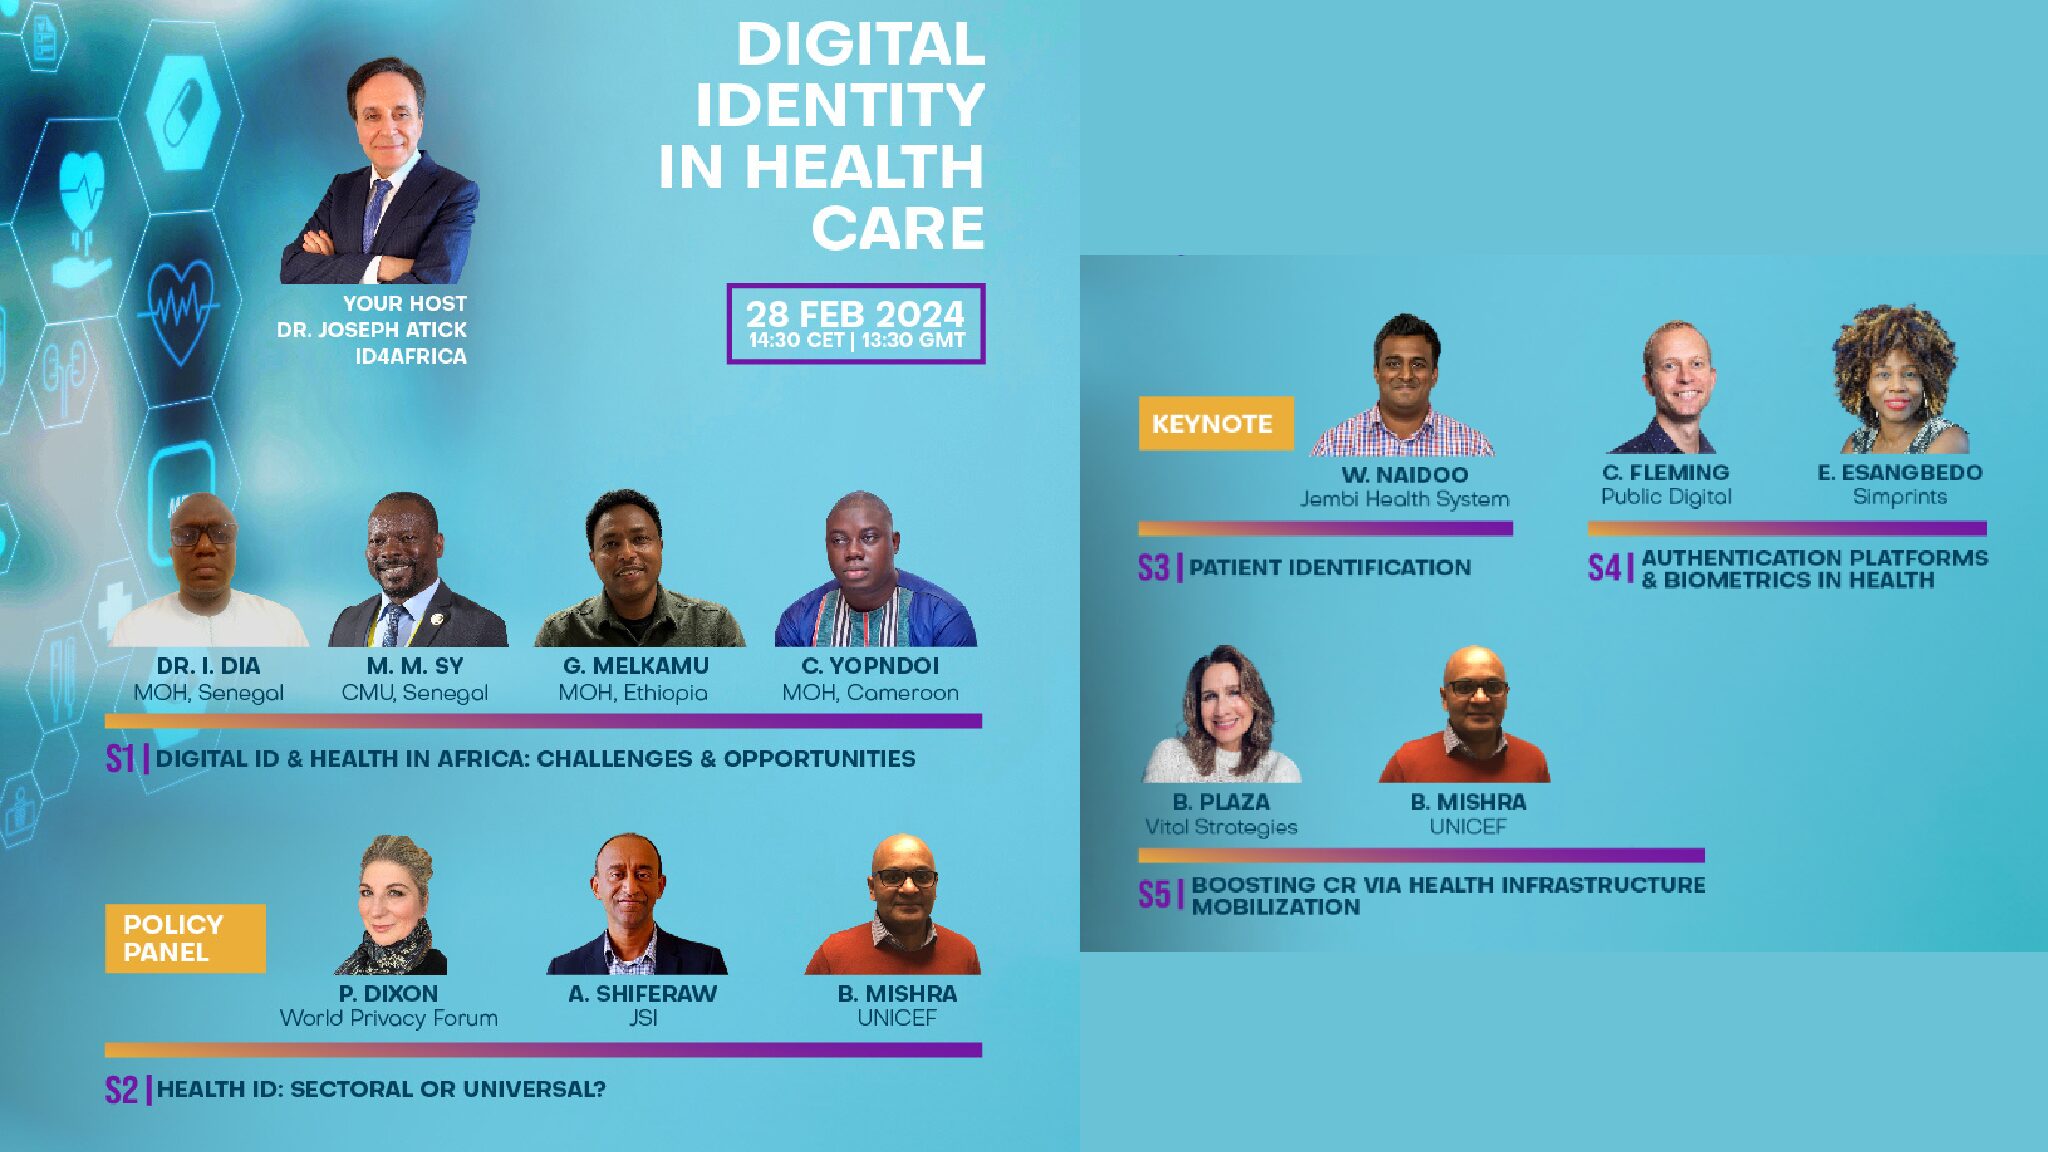 Digital Identity in Health Care